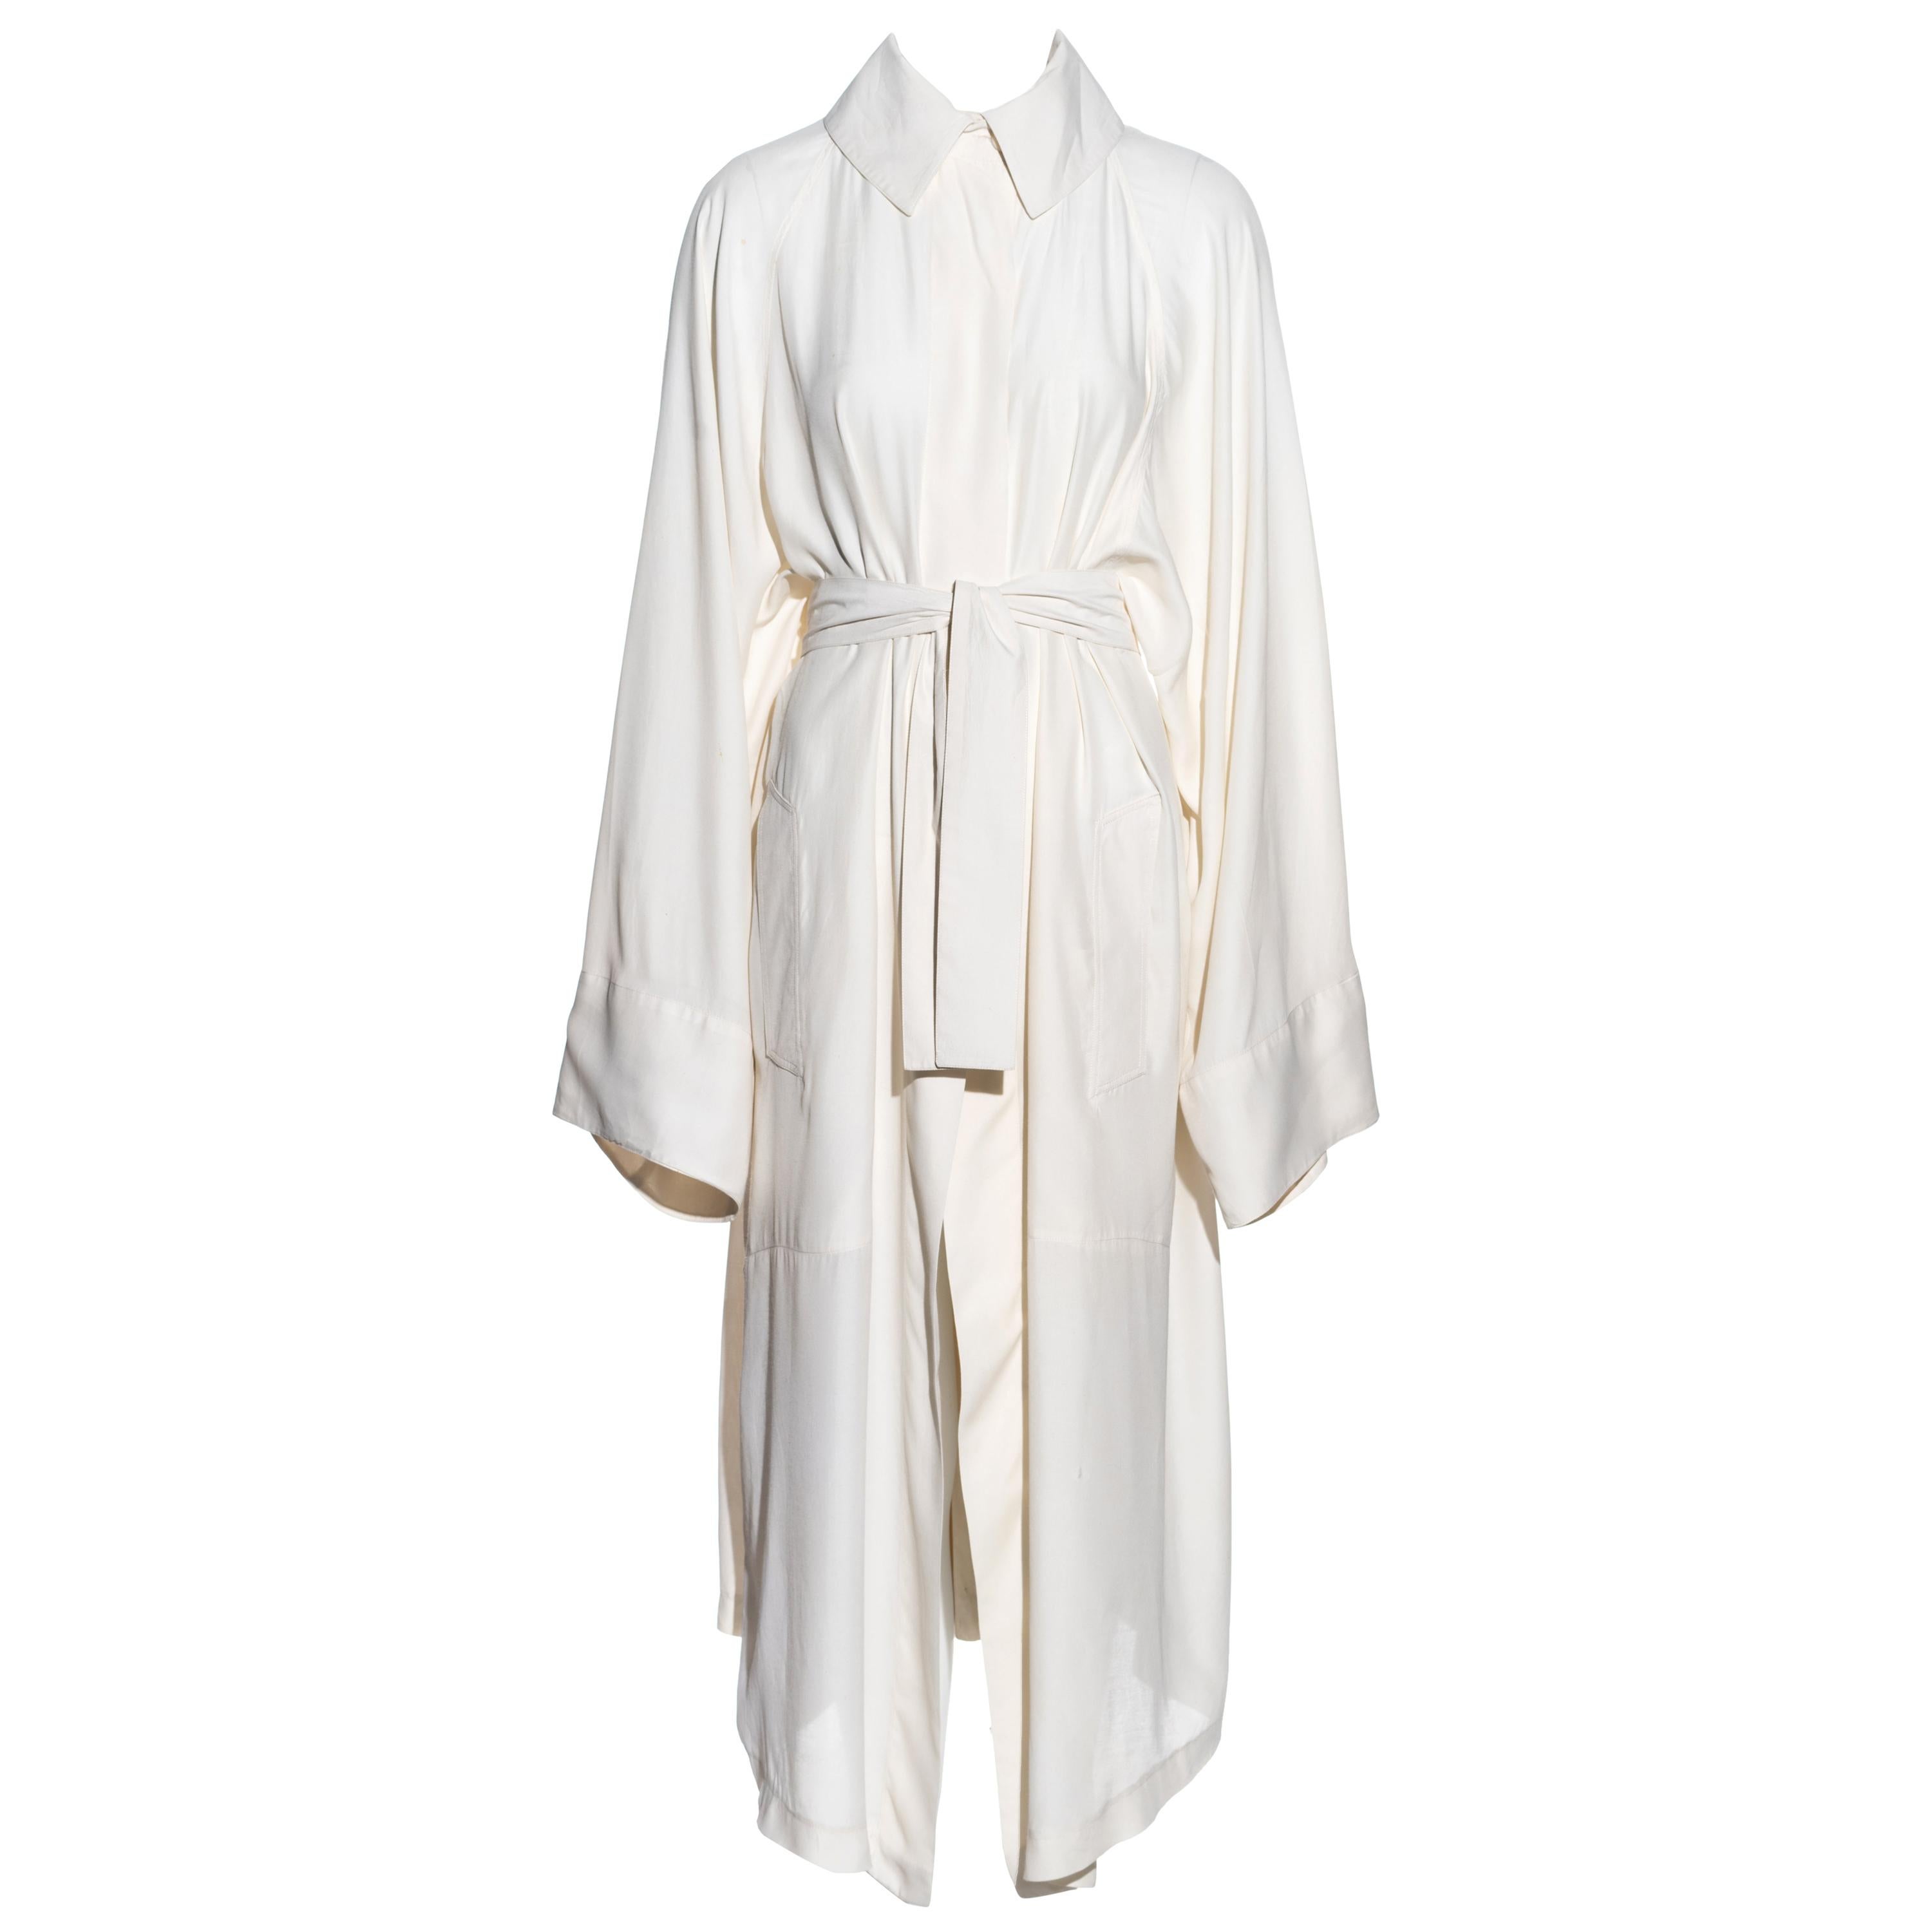 Azzedine Alaia cream cotton pleated coat dress, ss 1985